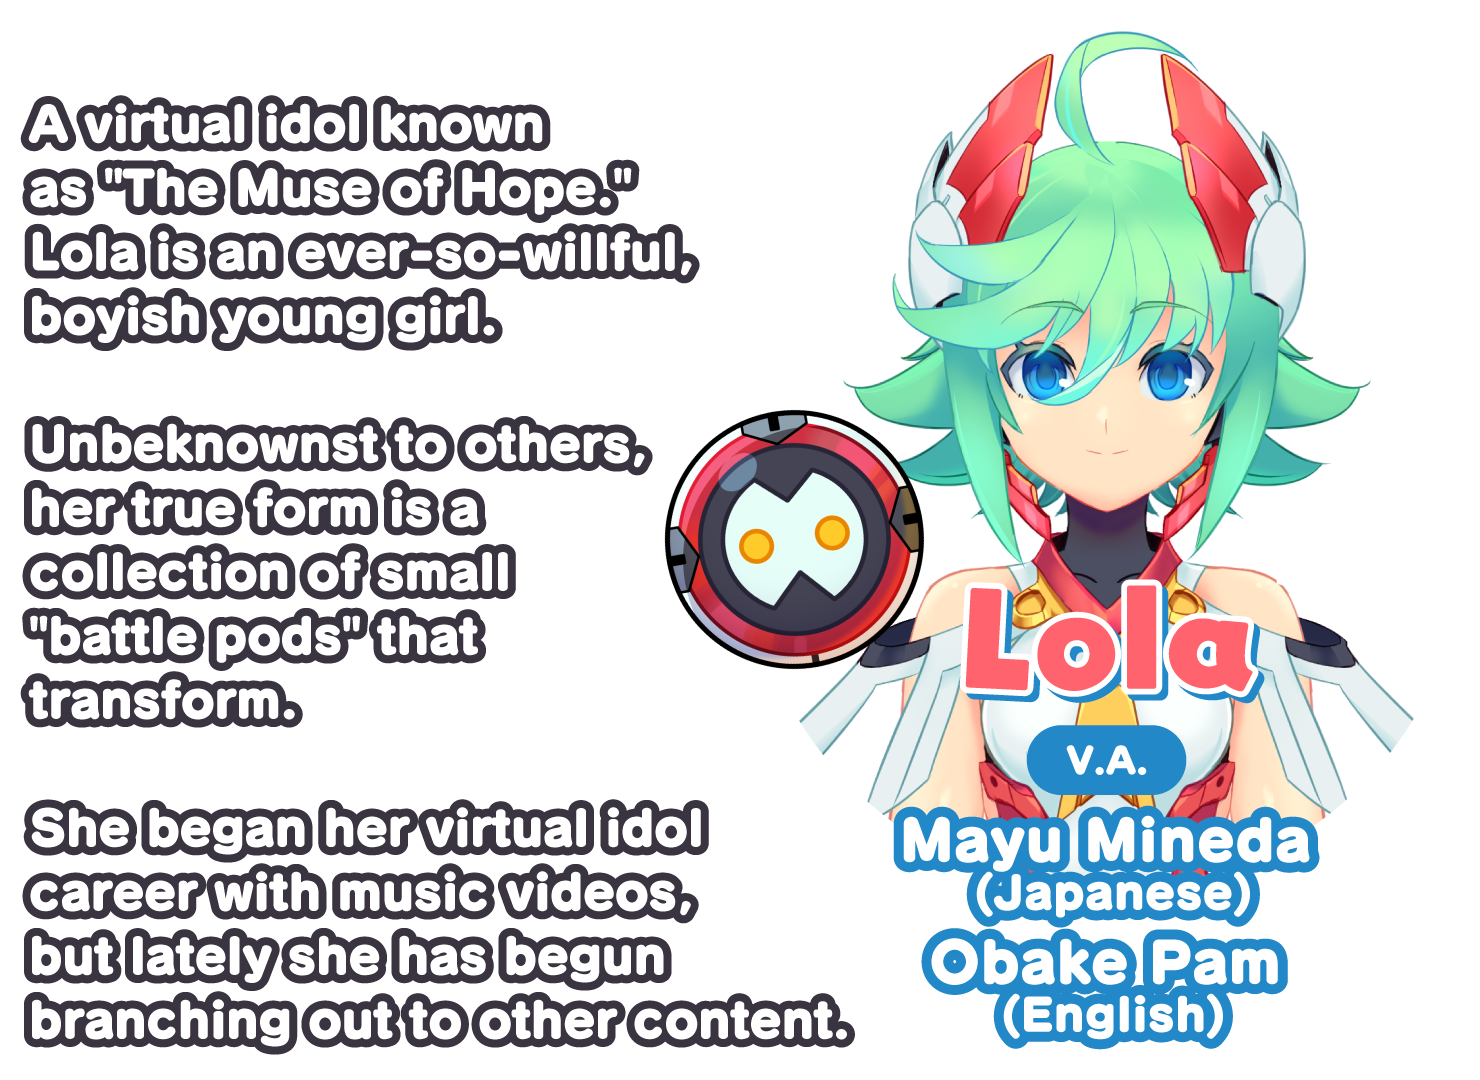 Lola - V.A. Mayu Mineda (Japanese), Obake Pam (English)